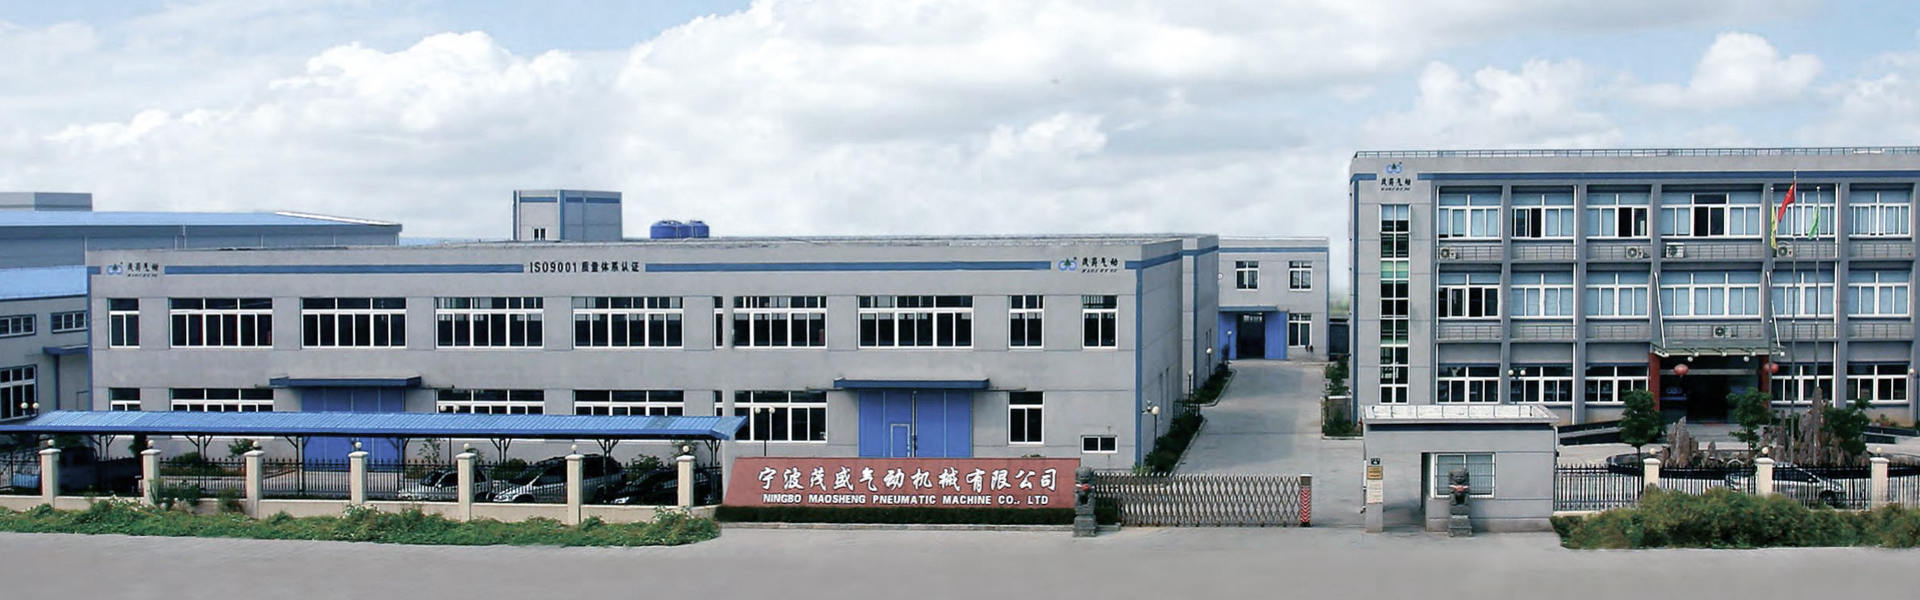 Ningbo Maosheng Pneumatic Machine Co.,Ltd. and Ningbo Jiangbei District Cicheng Pneumatic Components Factory